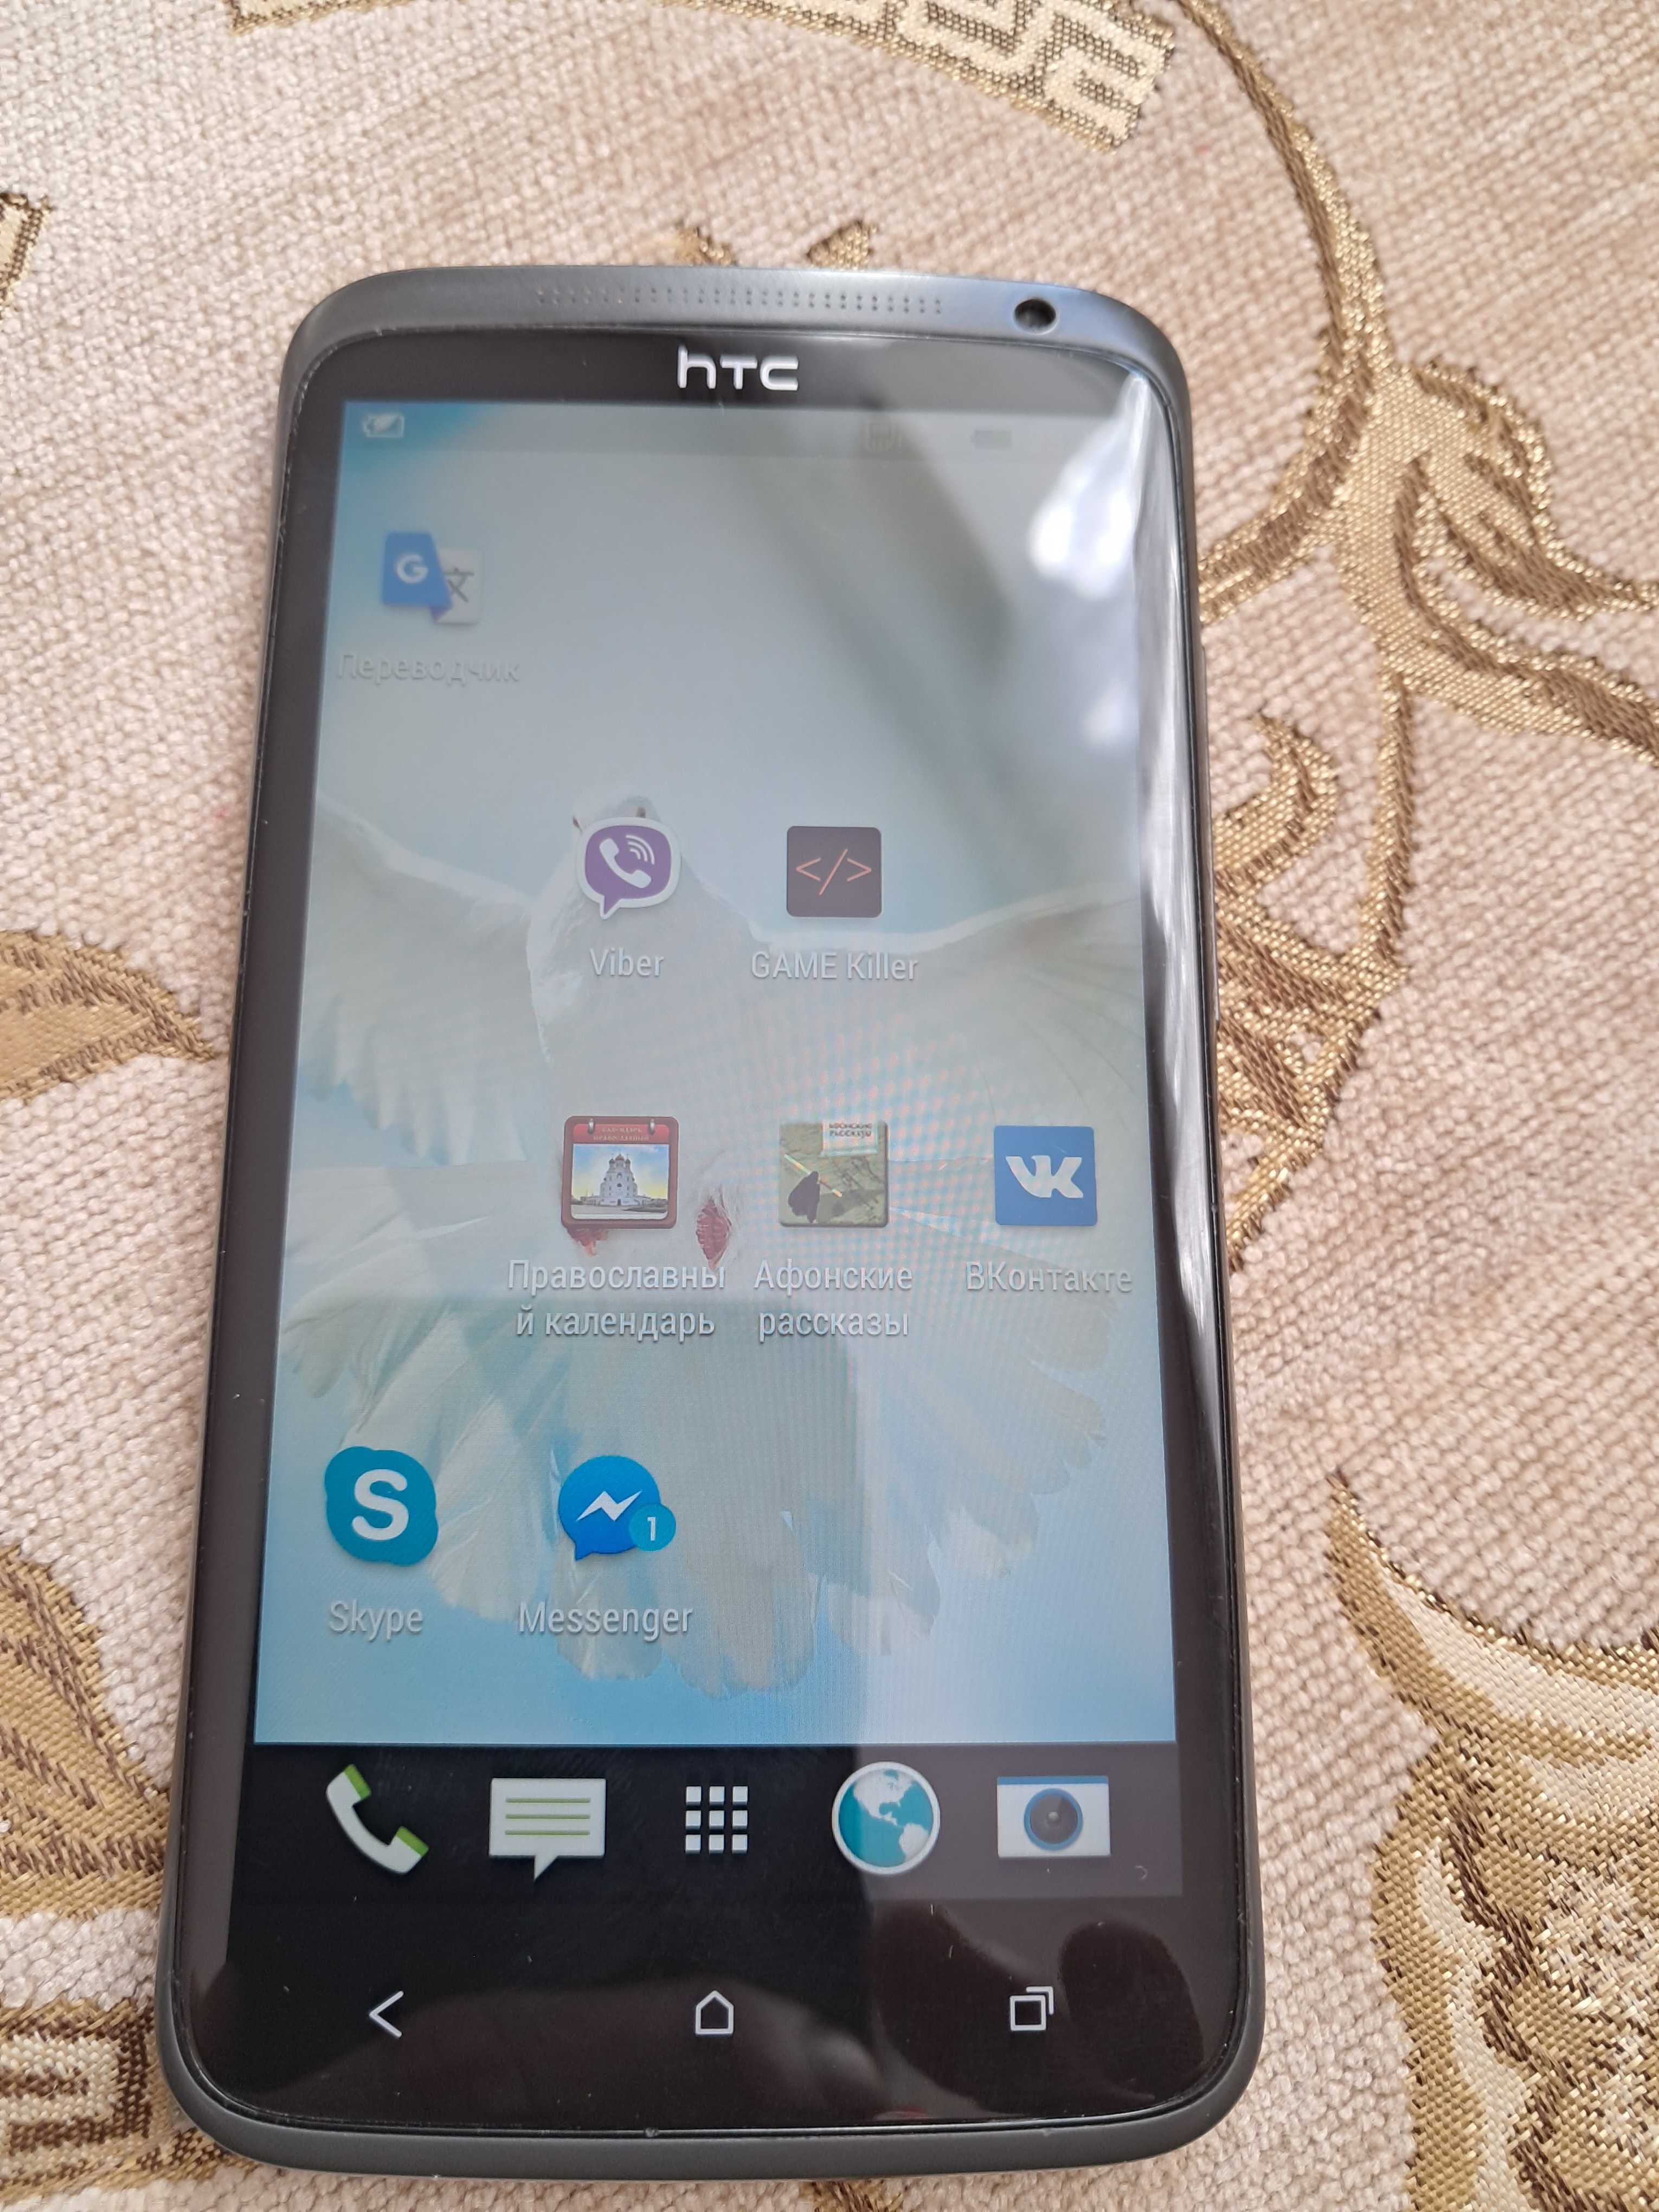 HTC One X Black S720e PJ46100